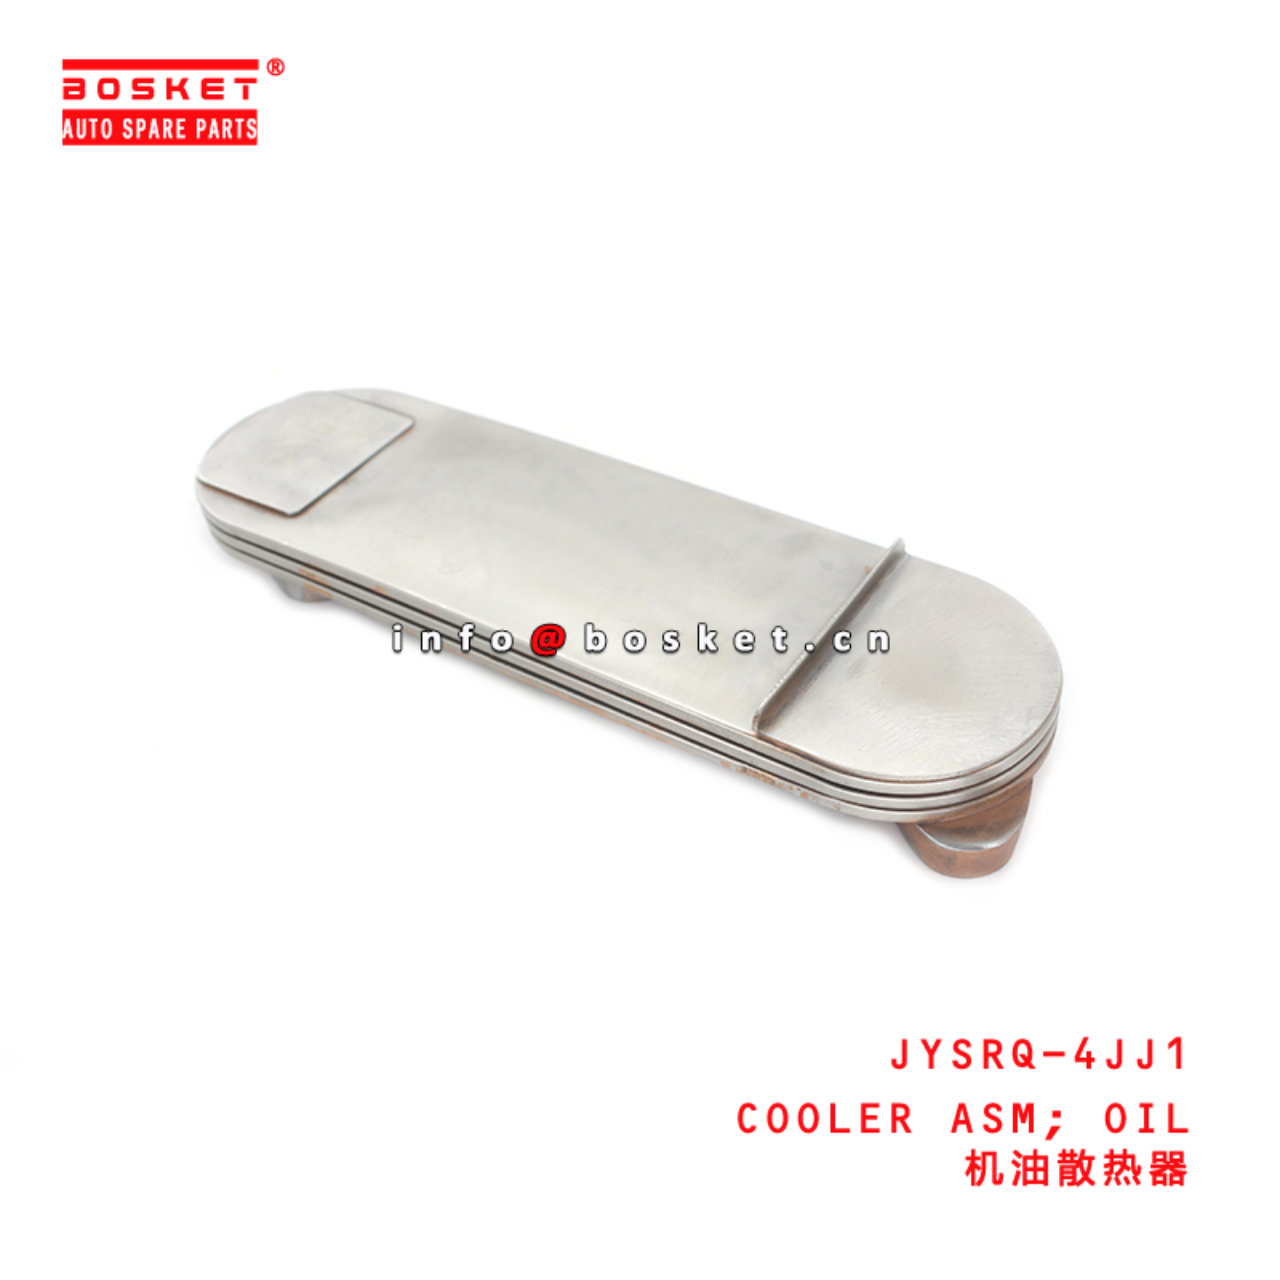 JYSRQ-4JJ1 Oil Cooler Assembly Suitable for ISUZU 4JJ1